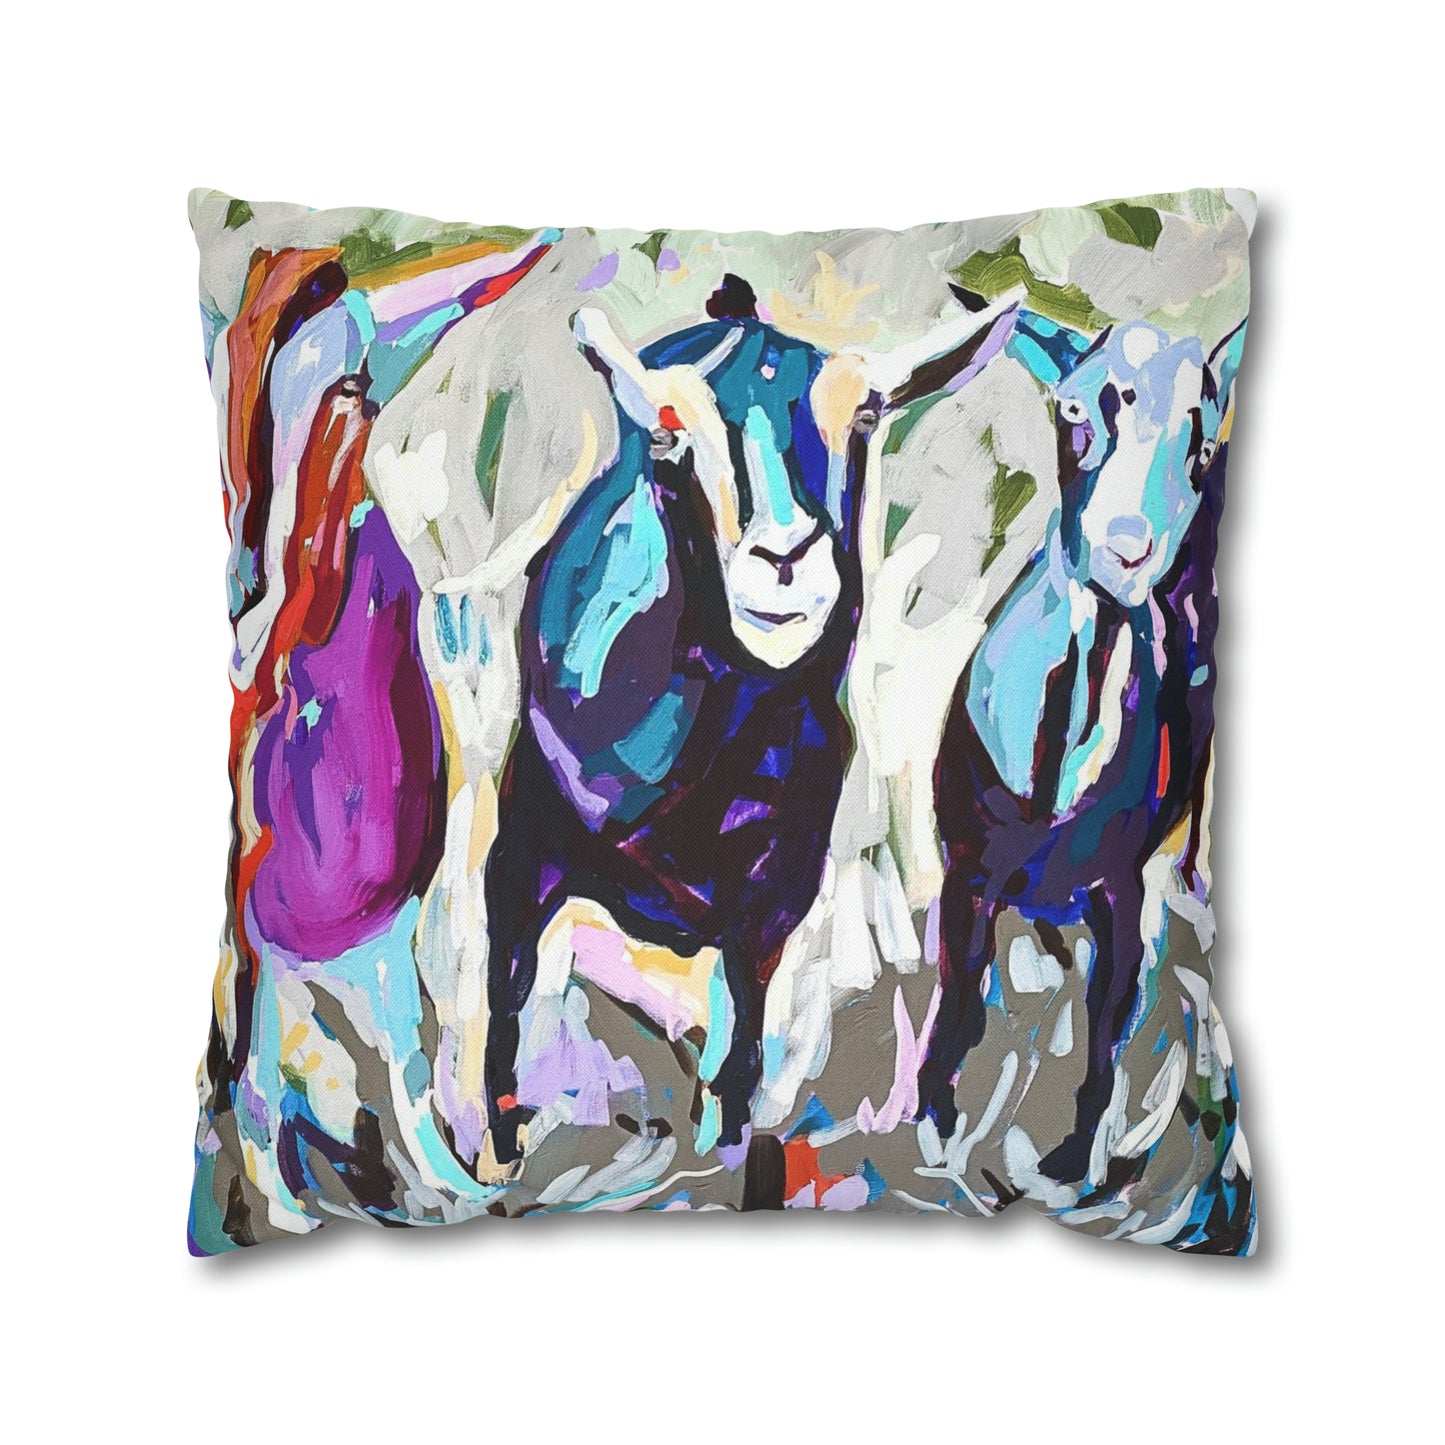 Goat/Iowa pillow cover